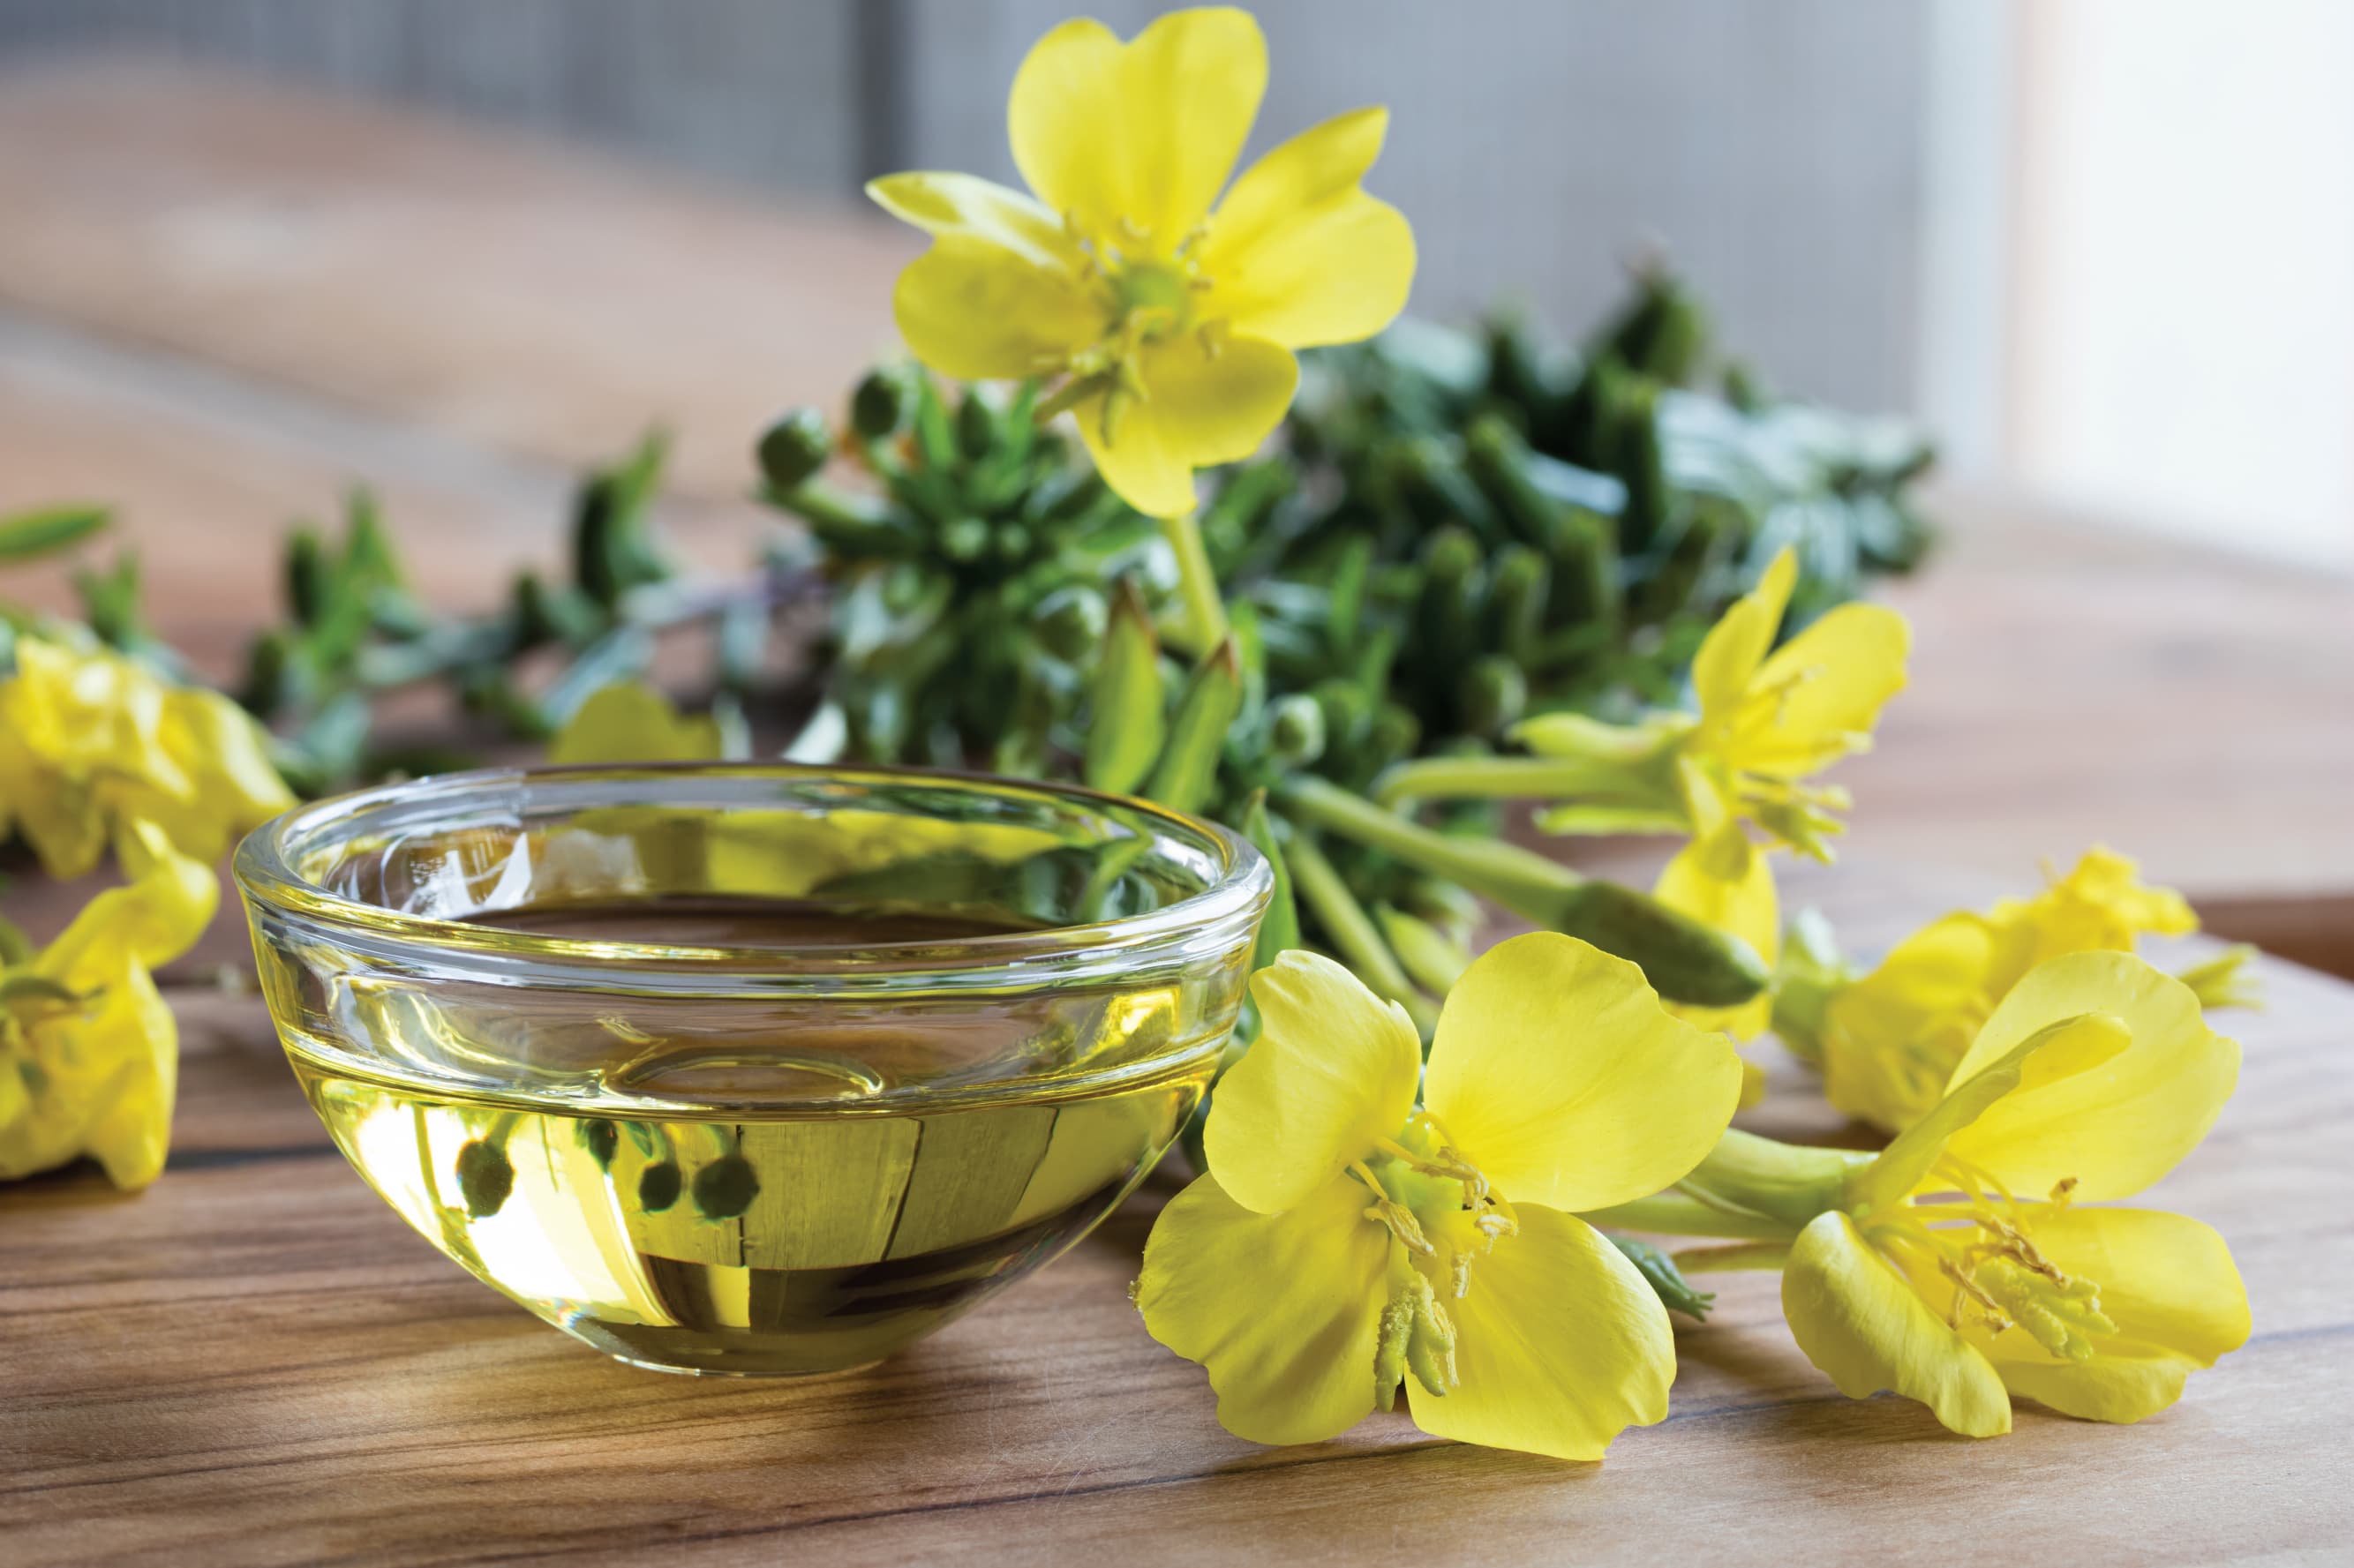 Manage PMS symptoms with evening primrose oil